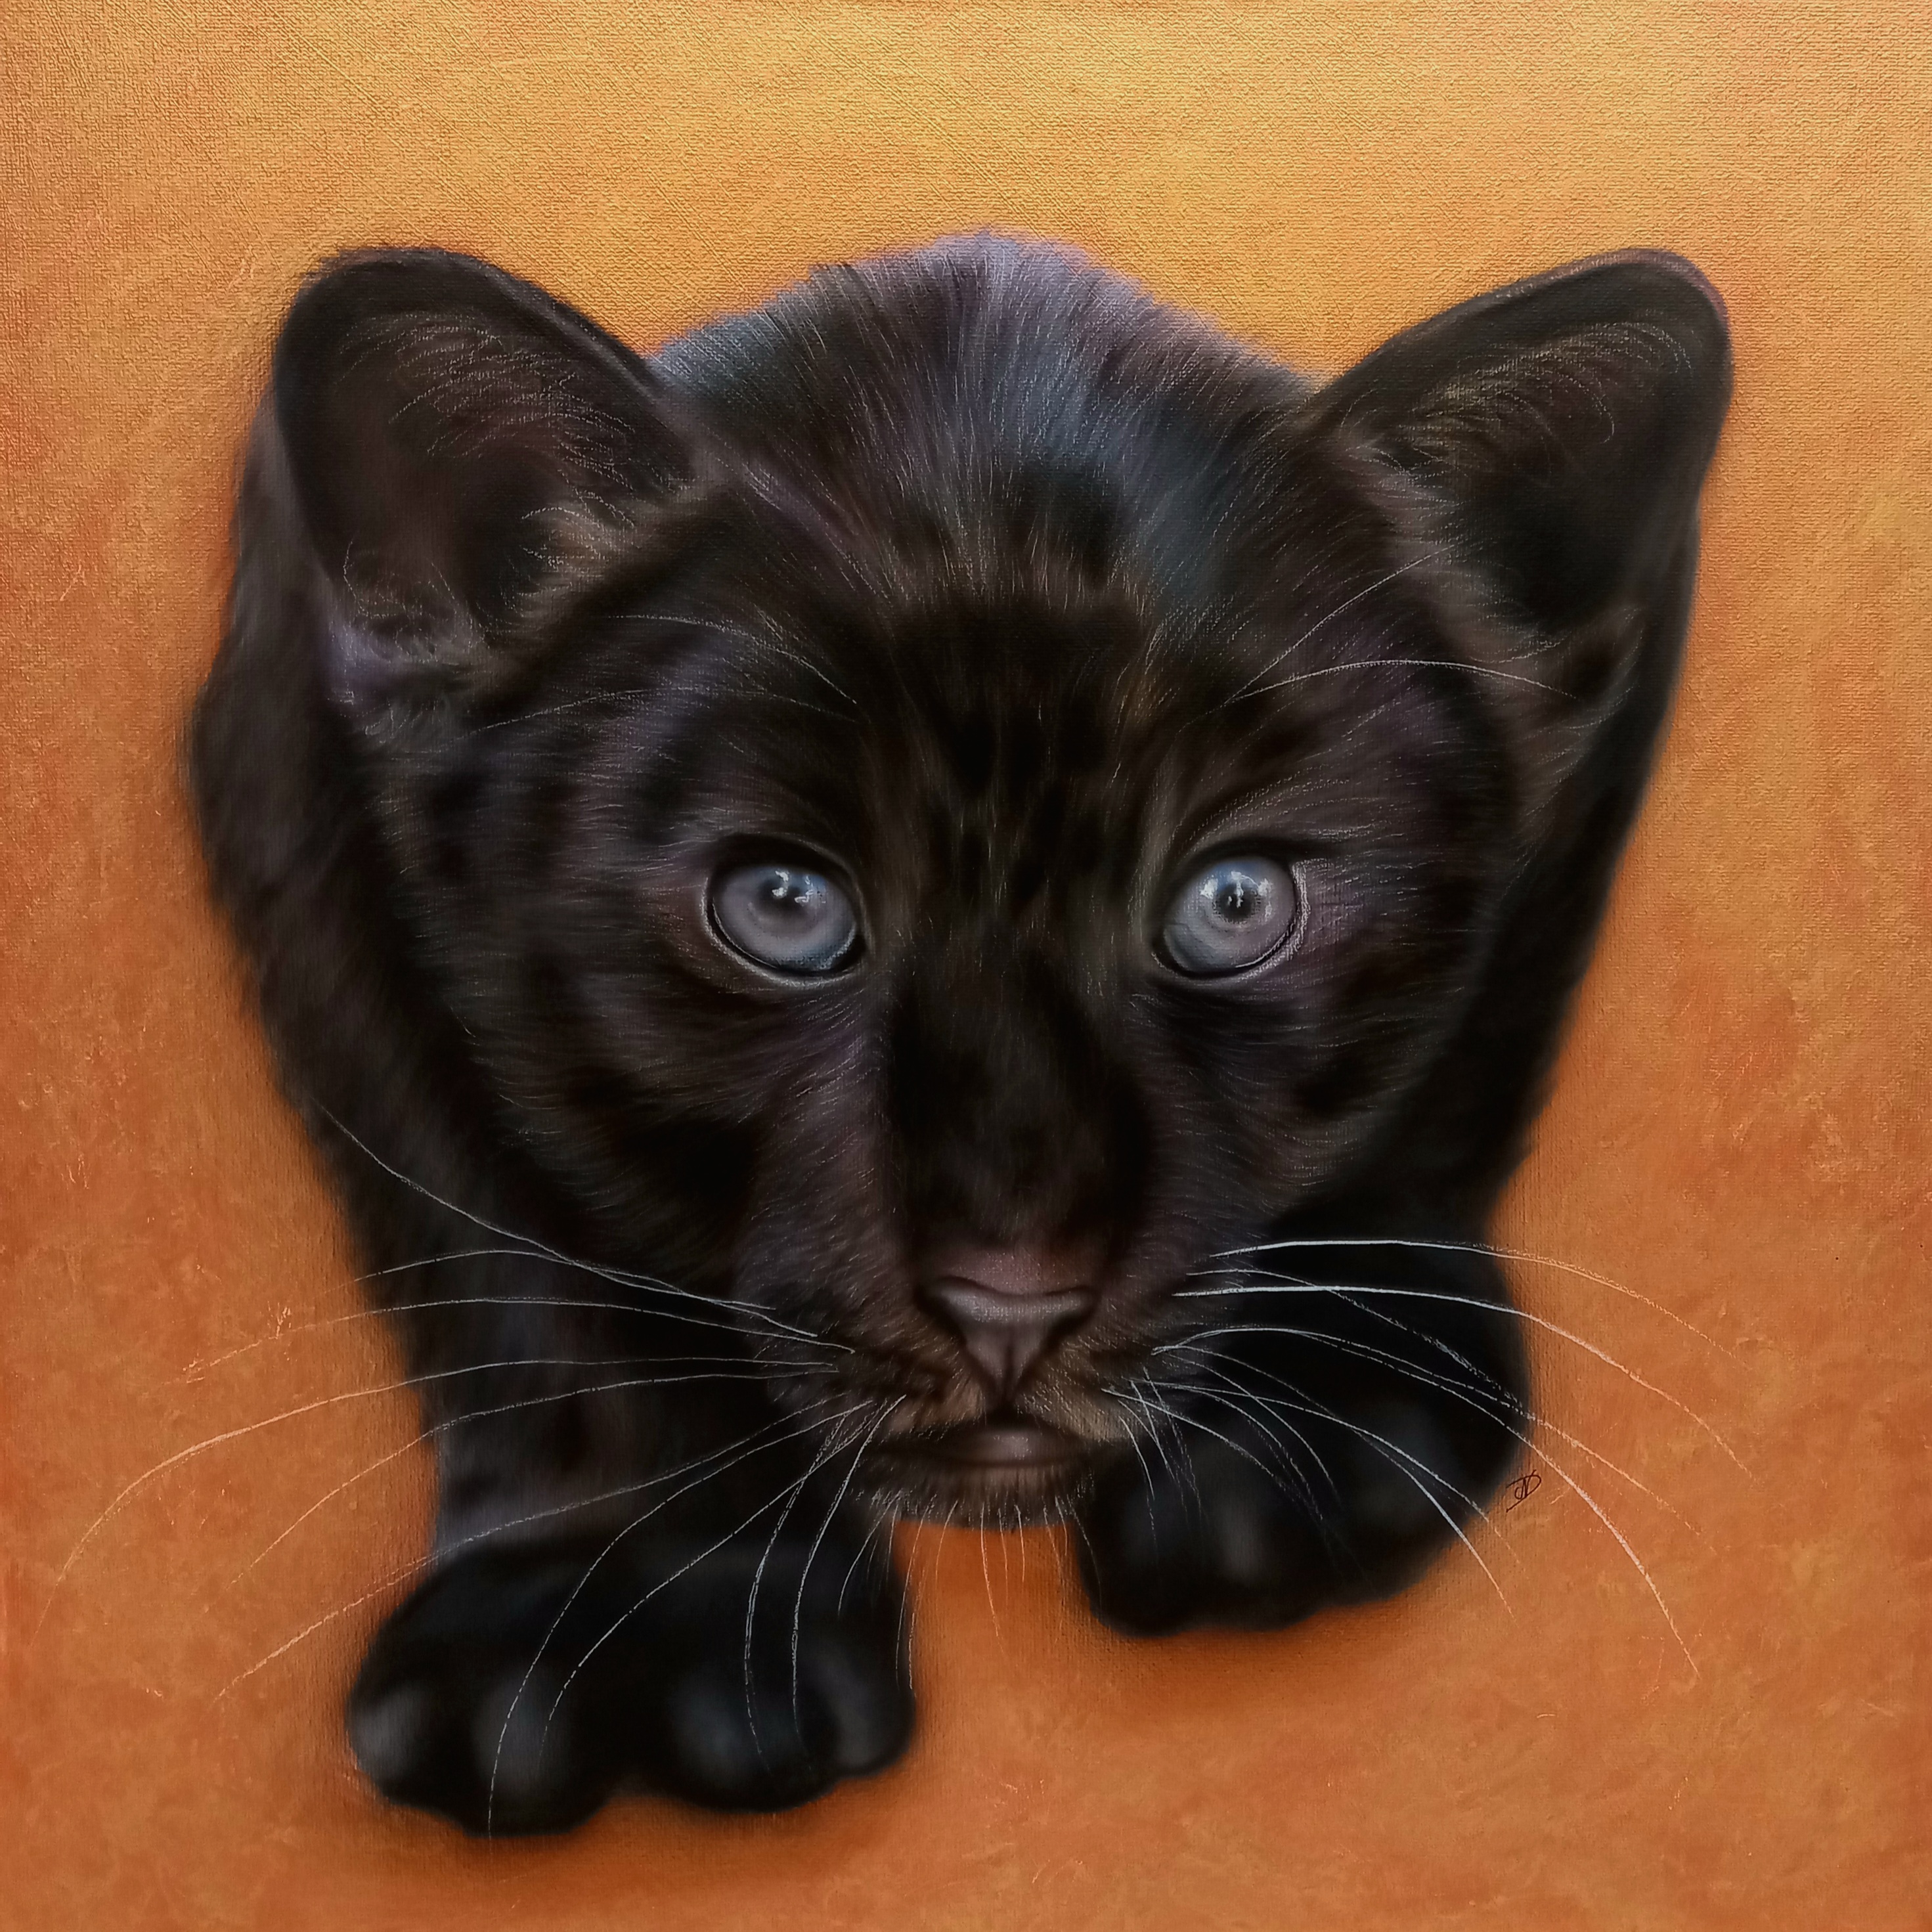 release the Jaguar cub